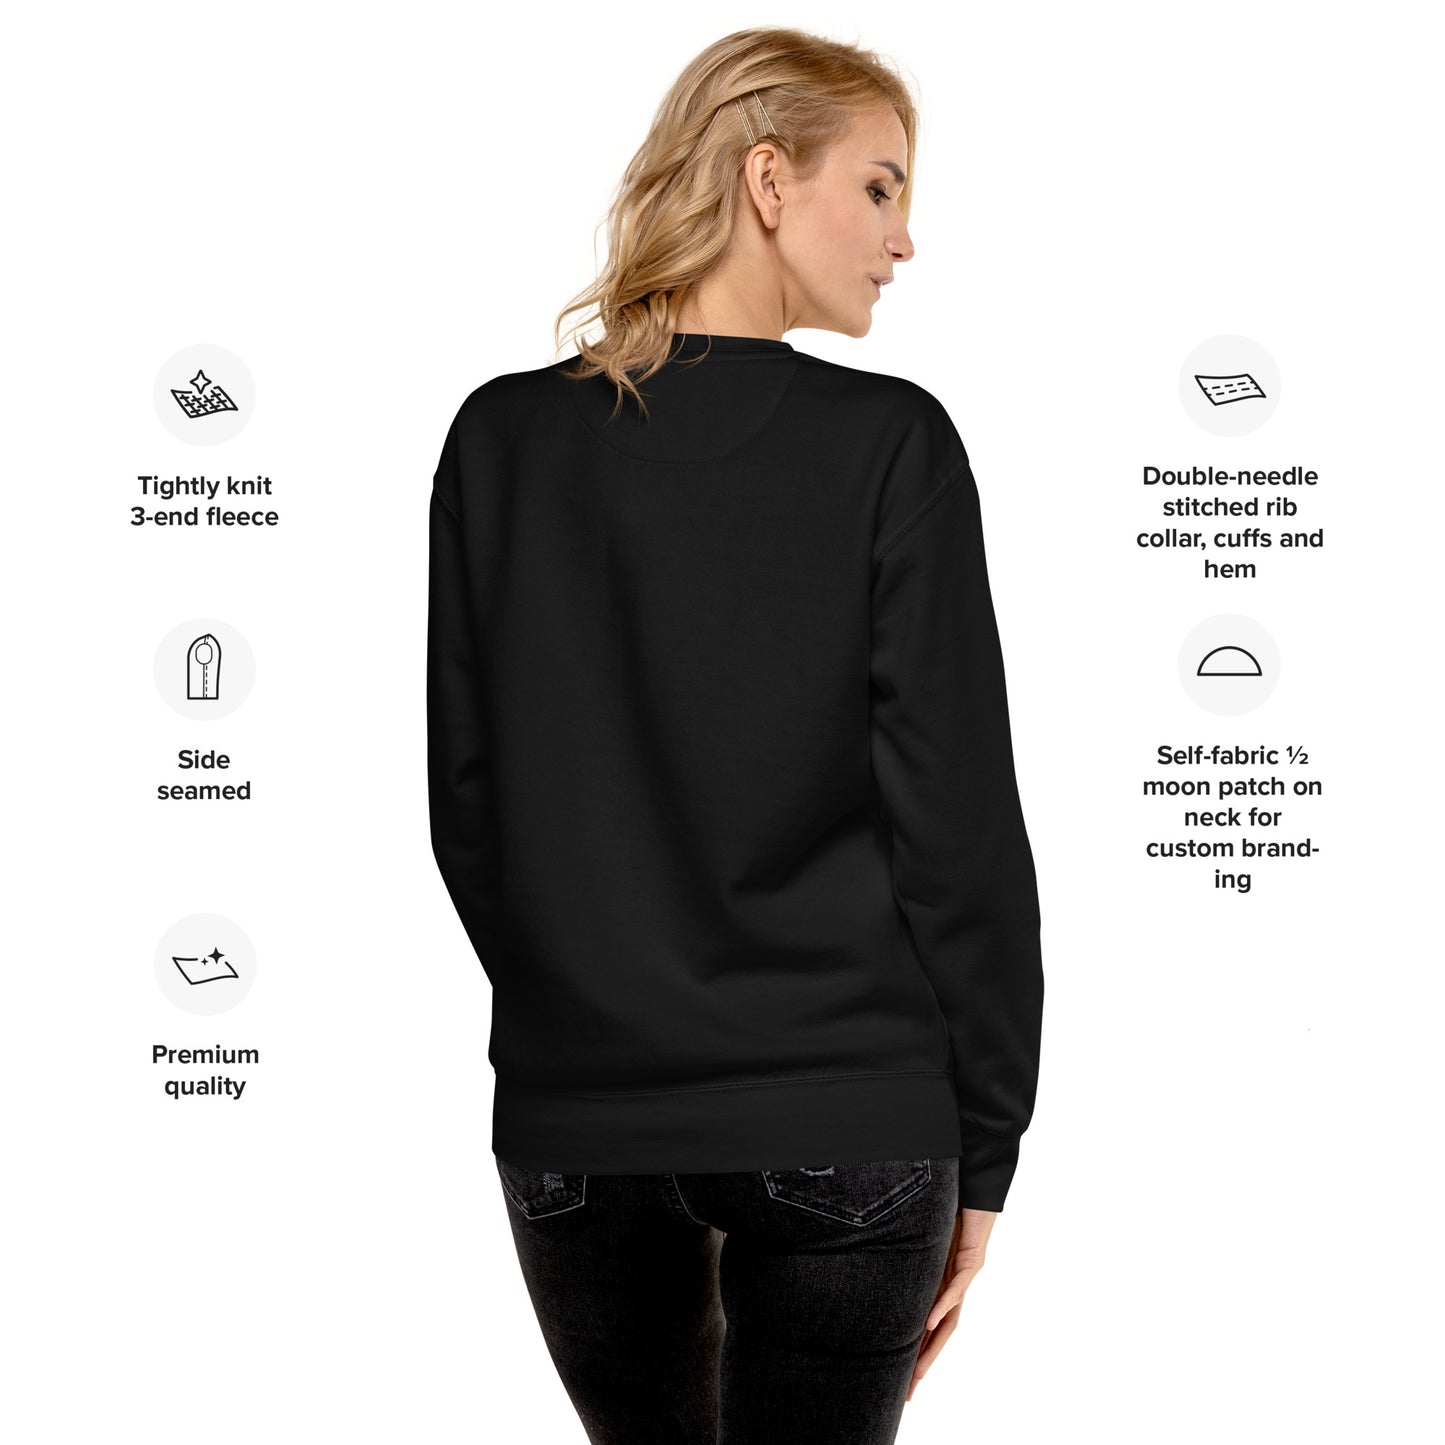 GSD/Malinois/Shepherd Embroidered Unisex Sweatshirt Black